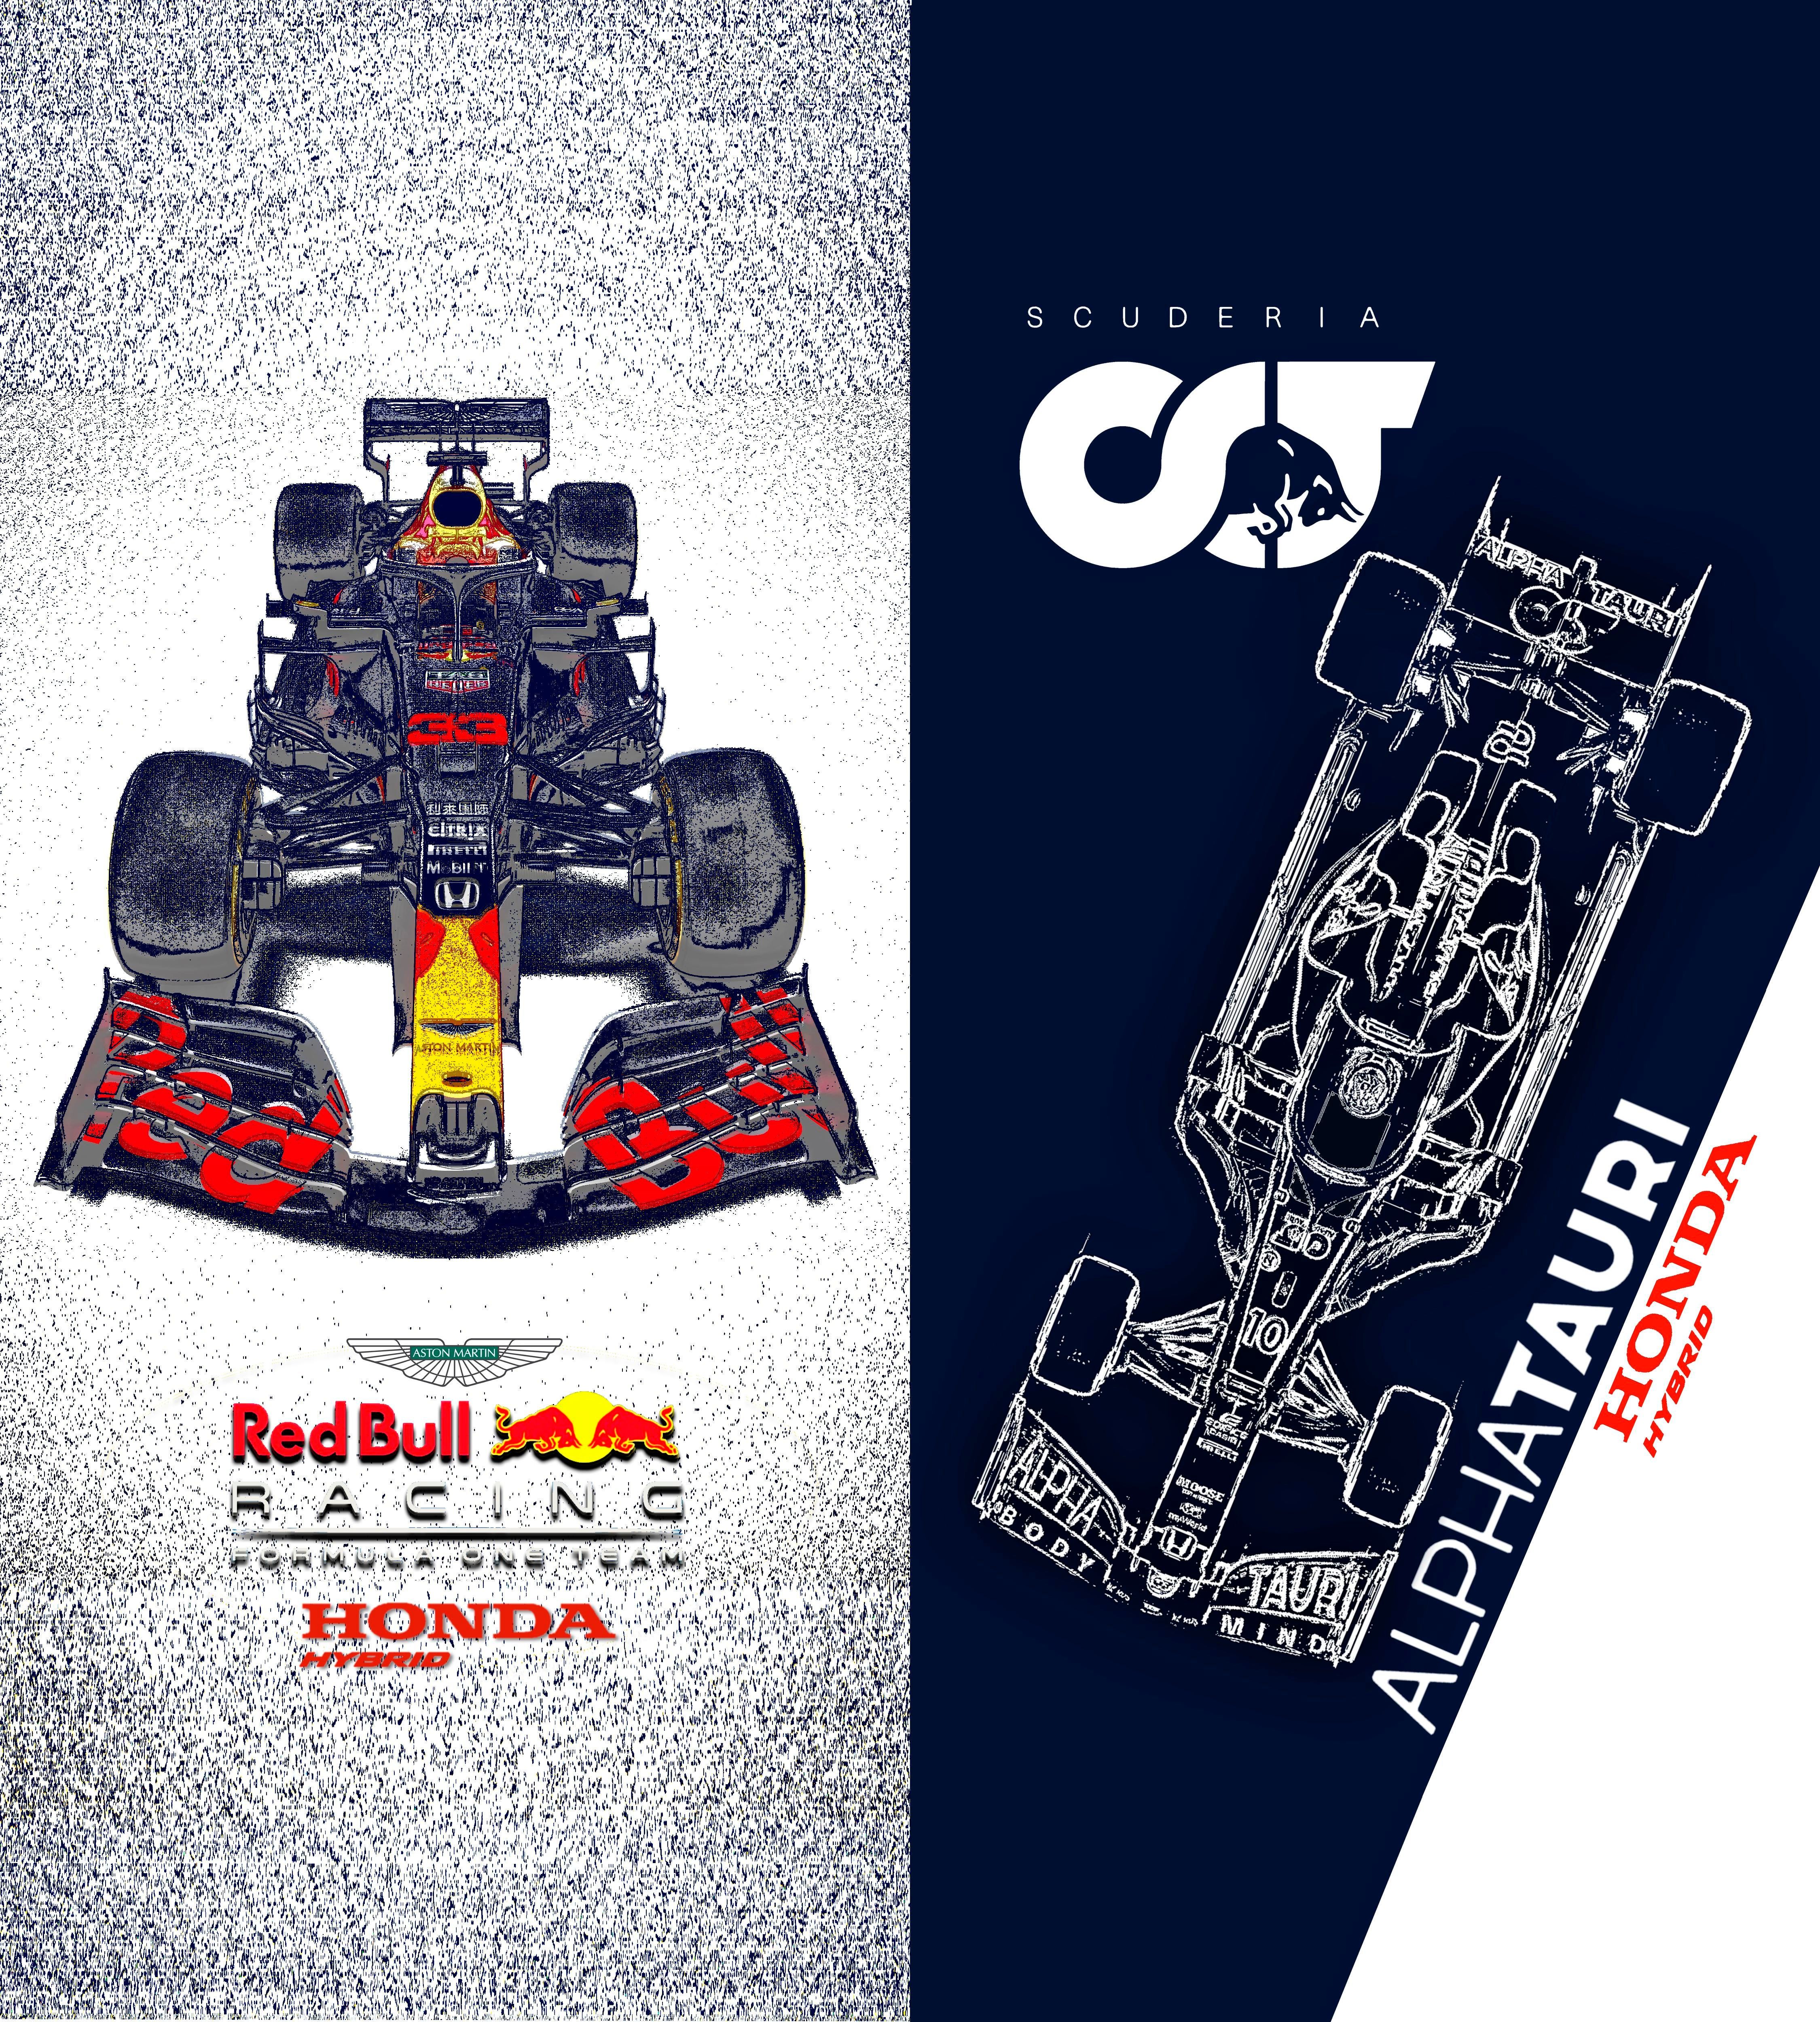 New Phone Wallpaper, one Red Bull Racing, one Scuderia AlphaTauri